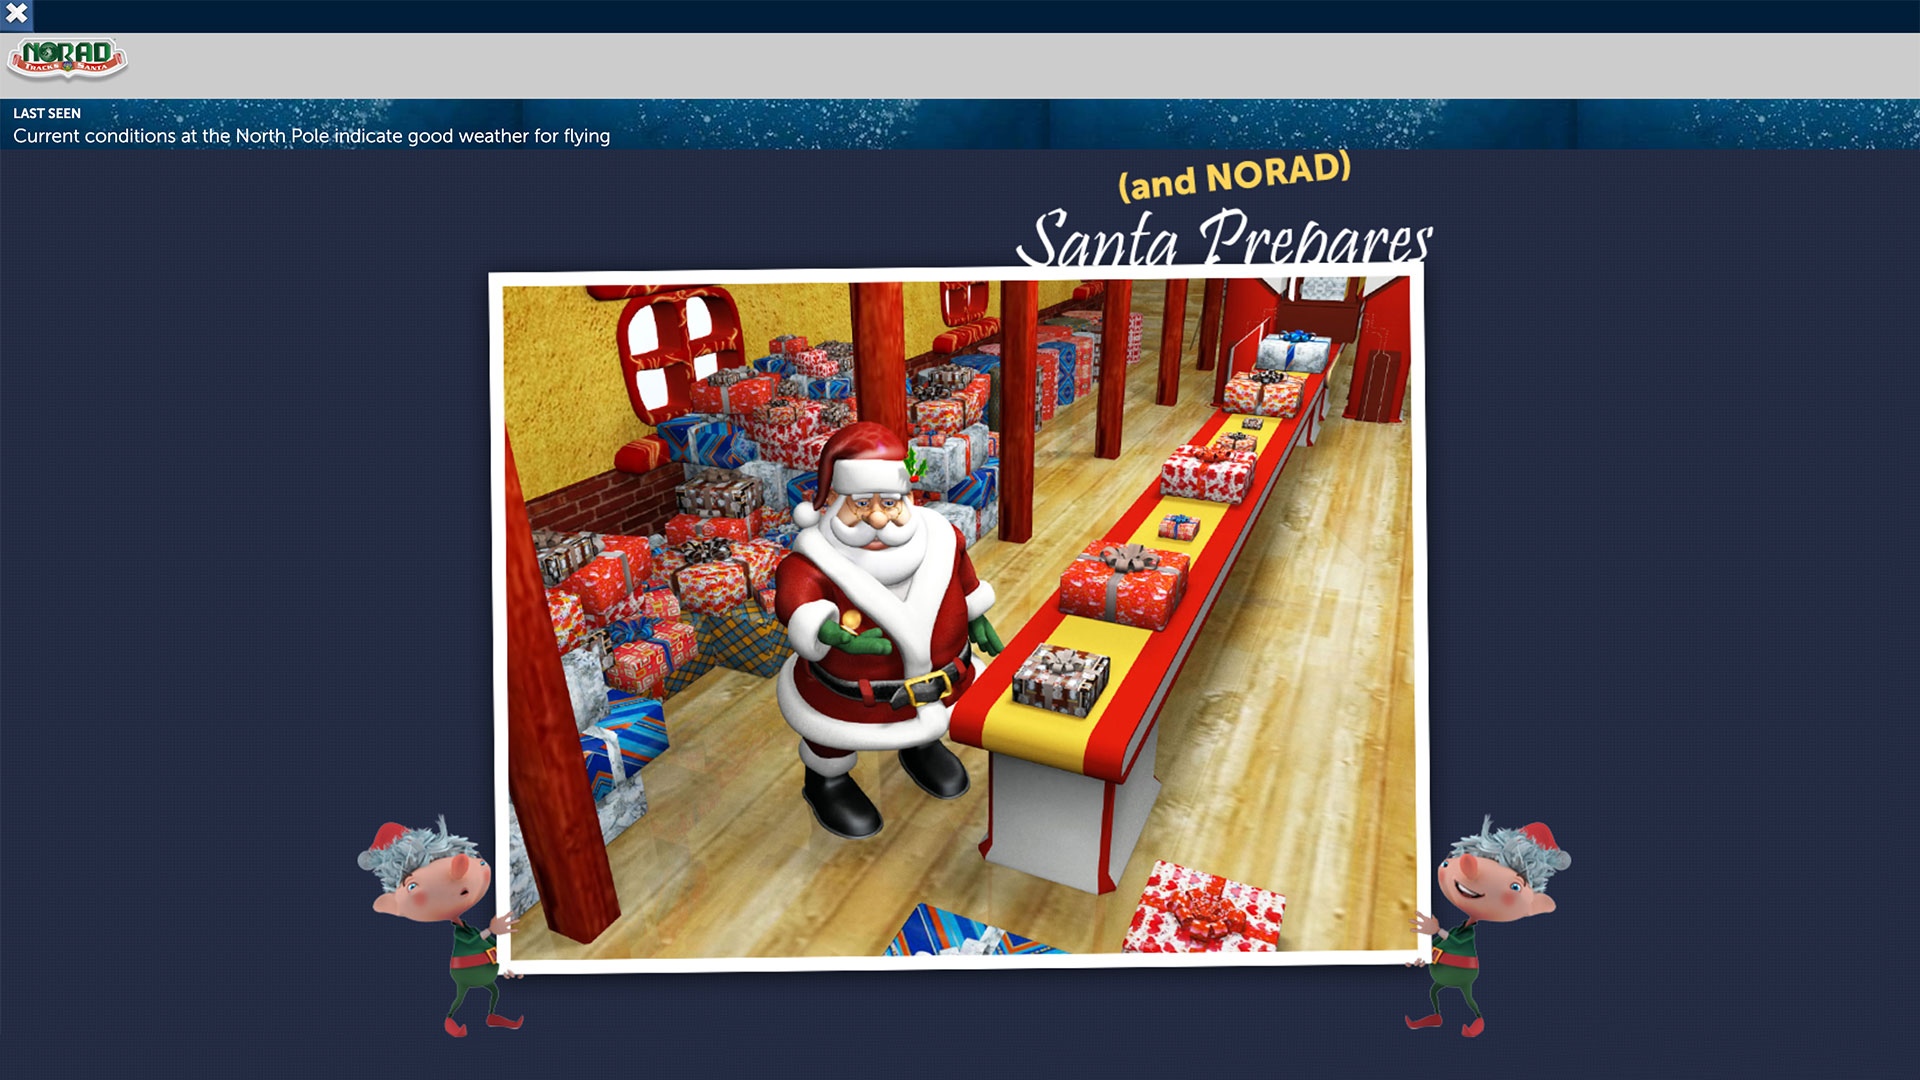 Santa prepares to take off on the NORAD santa tracker website